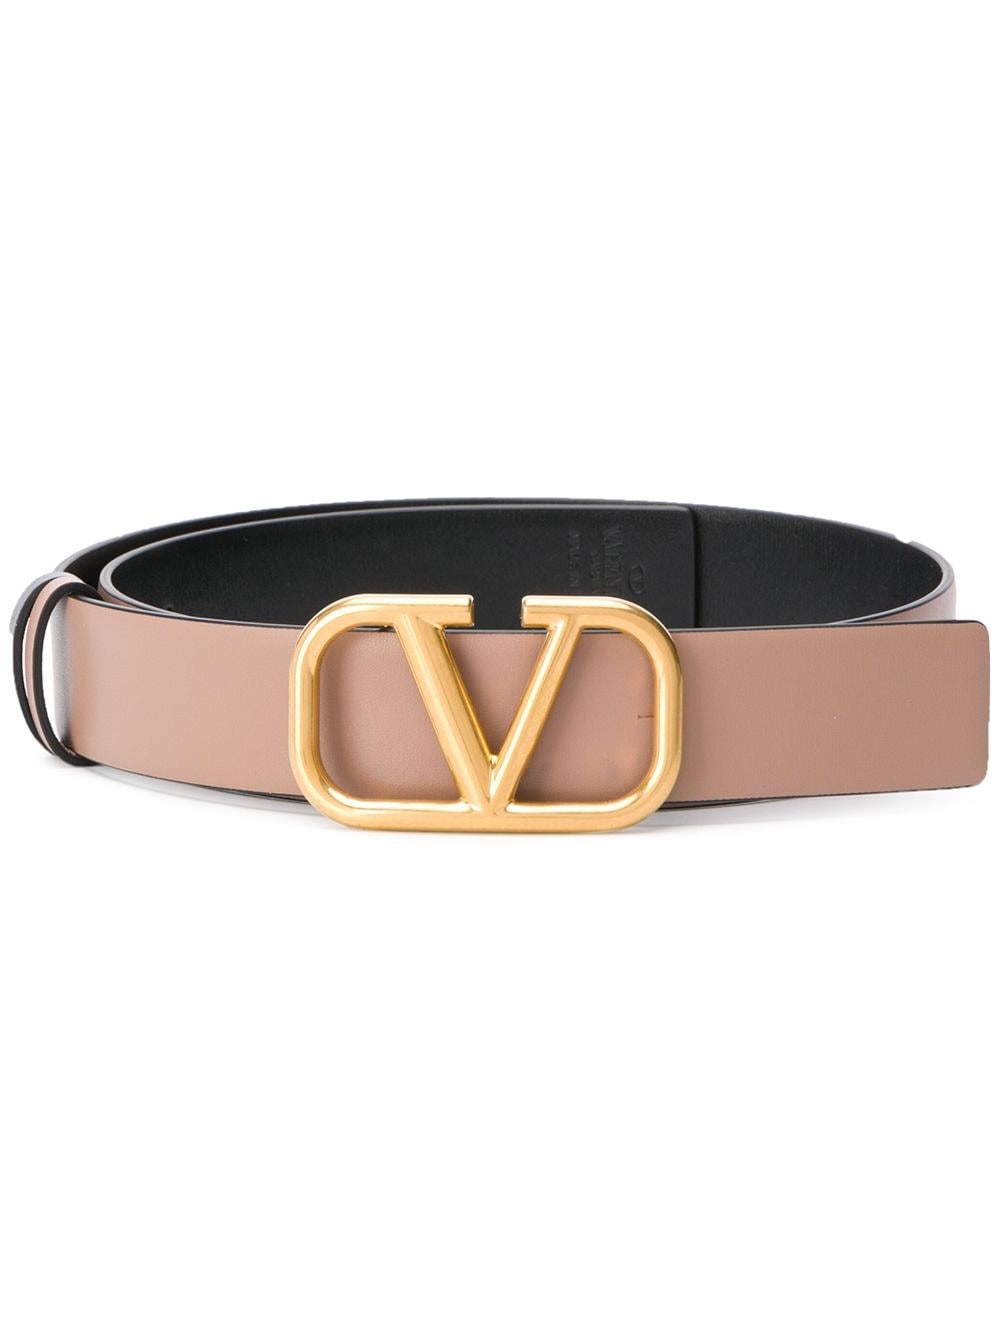 Valentino - Garavani VLogo Signature Reversible Belt - Beige